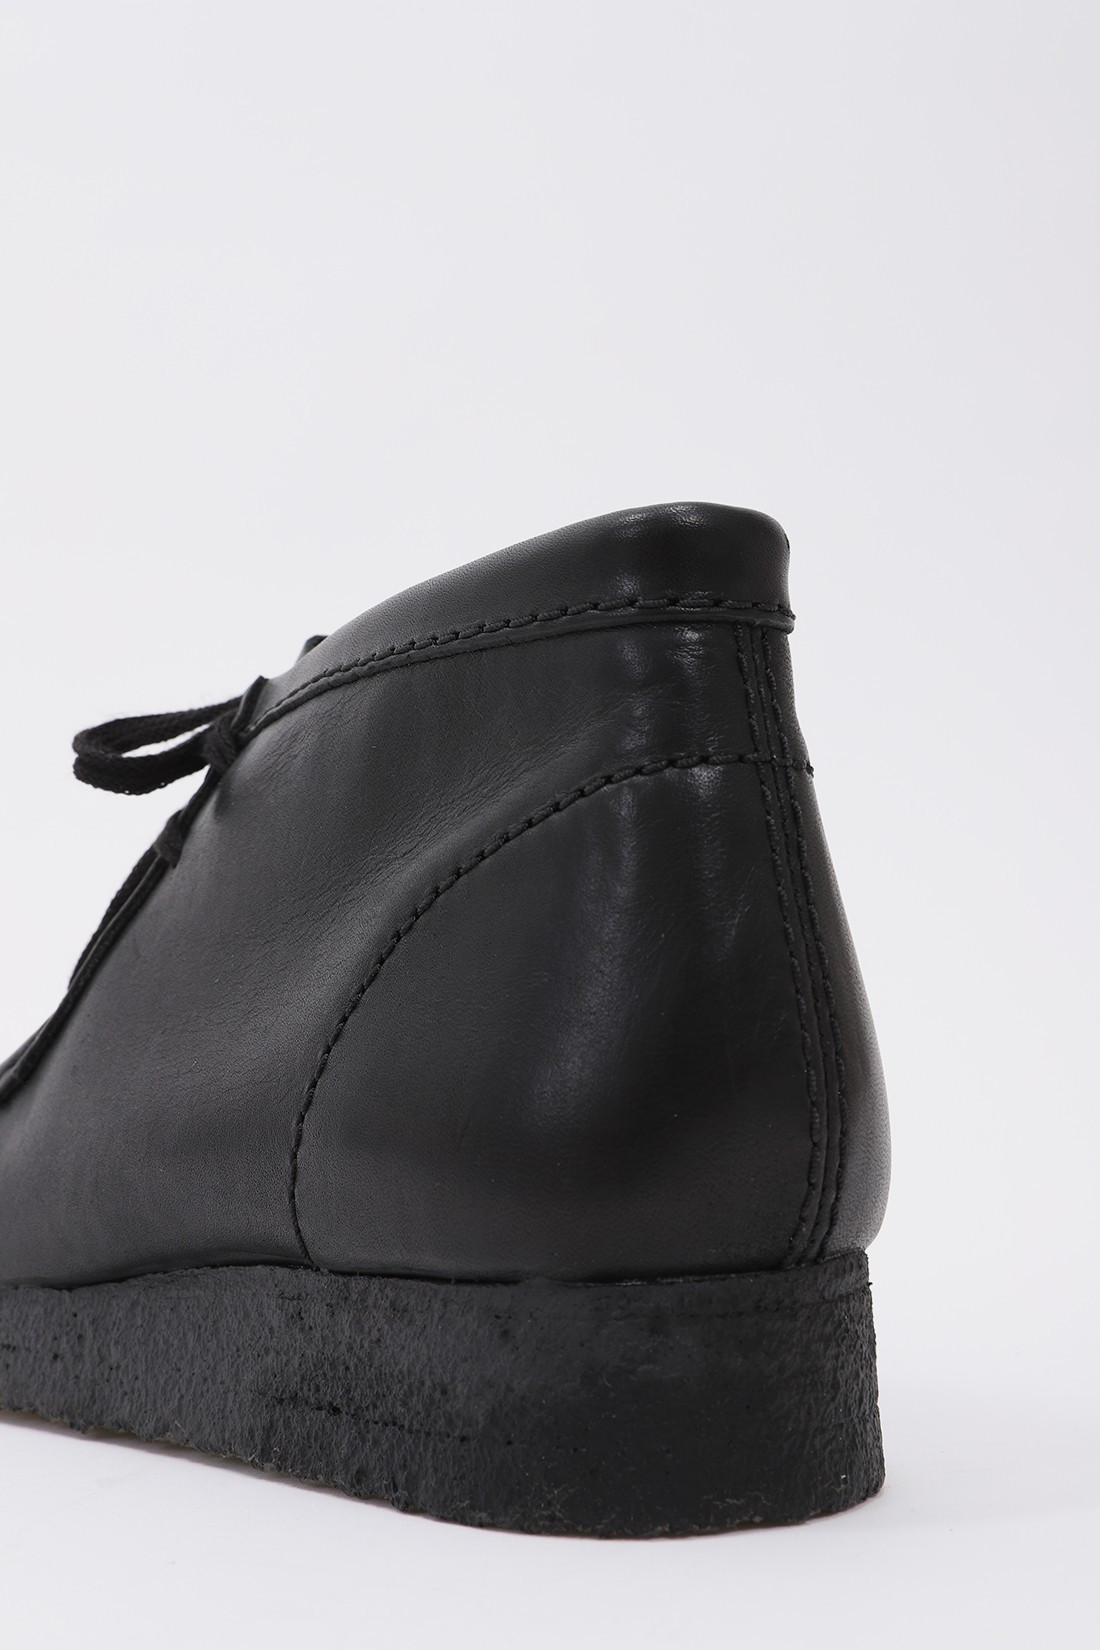 CLARKS ORIGINALS / Wallabee boot Black leather